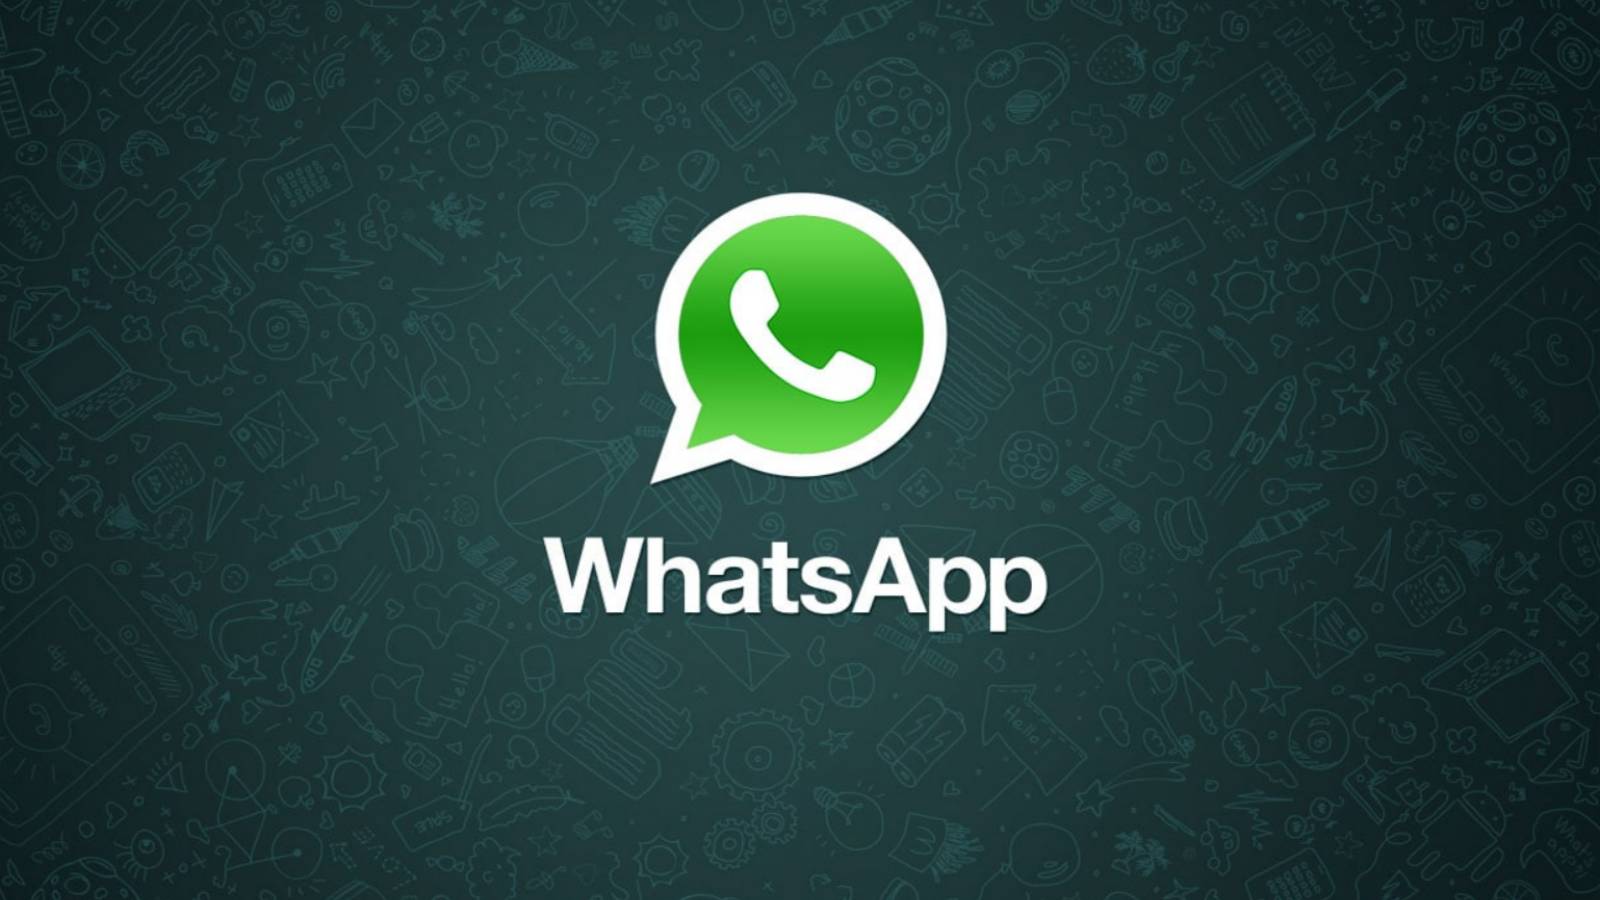 WhatsApp resursa